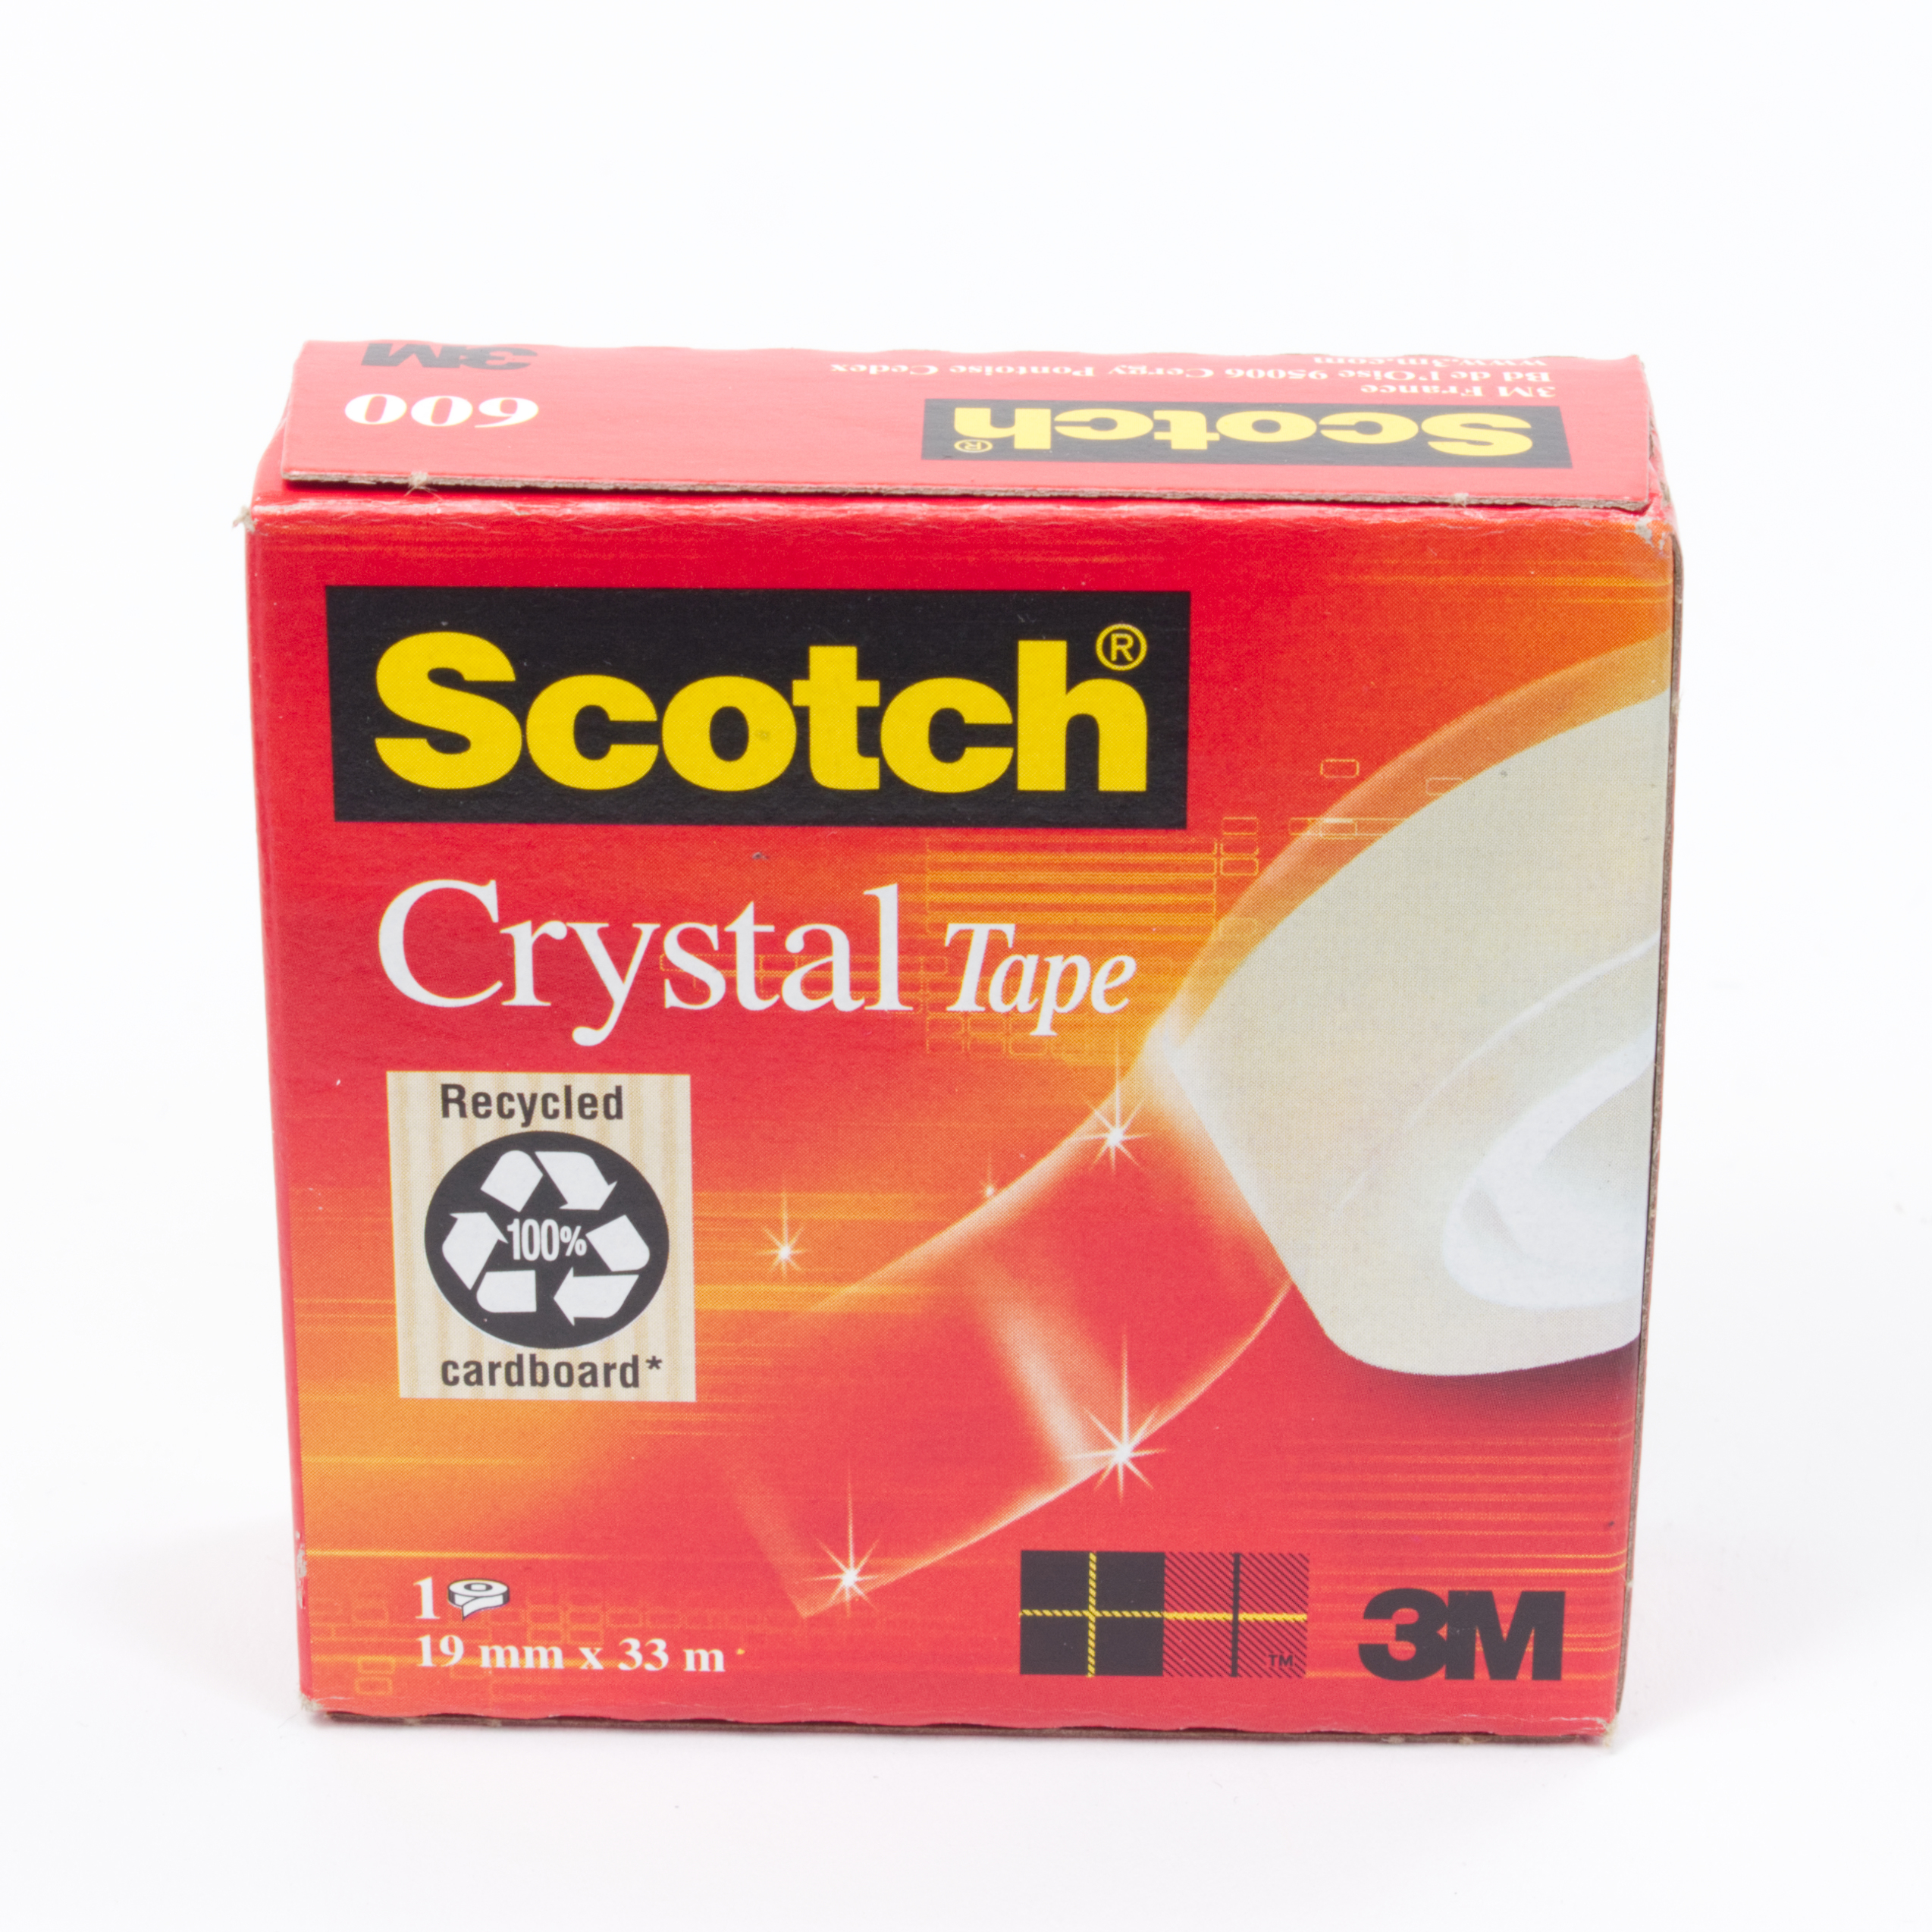 3M Scotch Crystal Tape 19 mm x 33 m